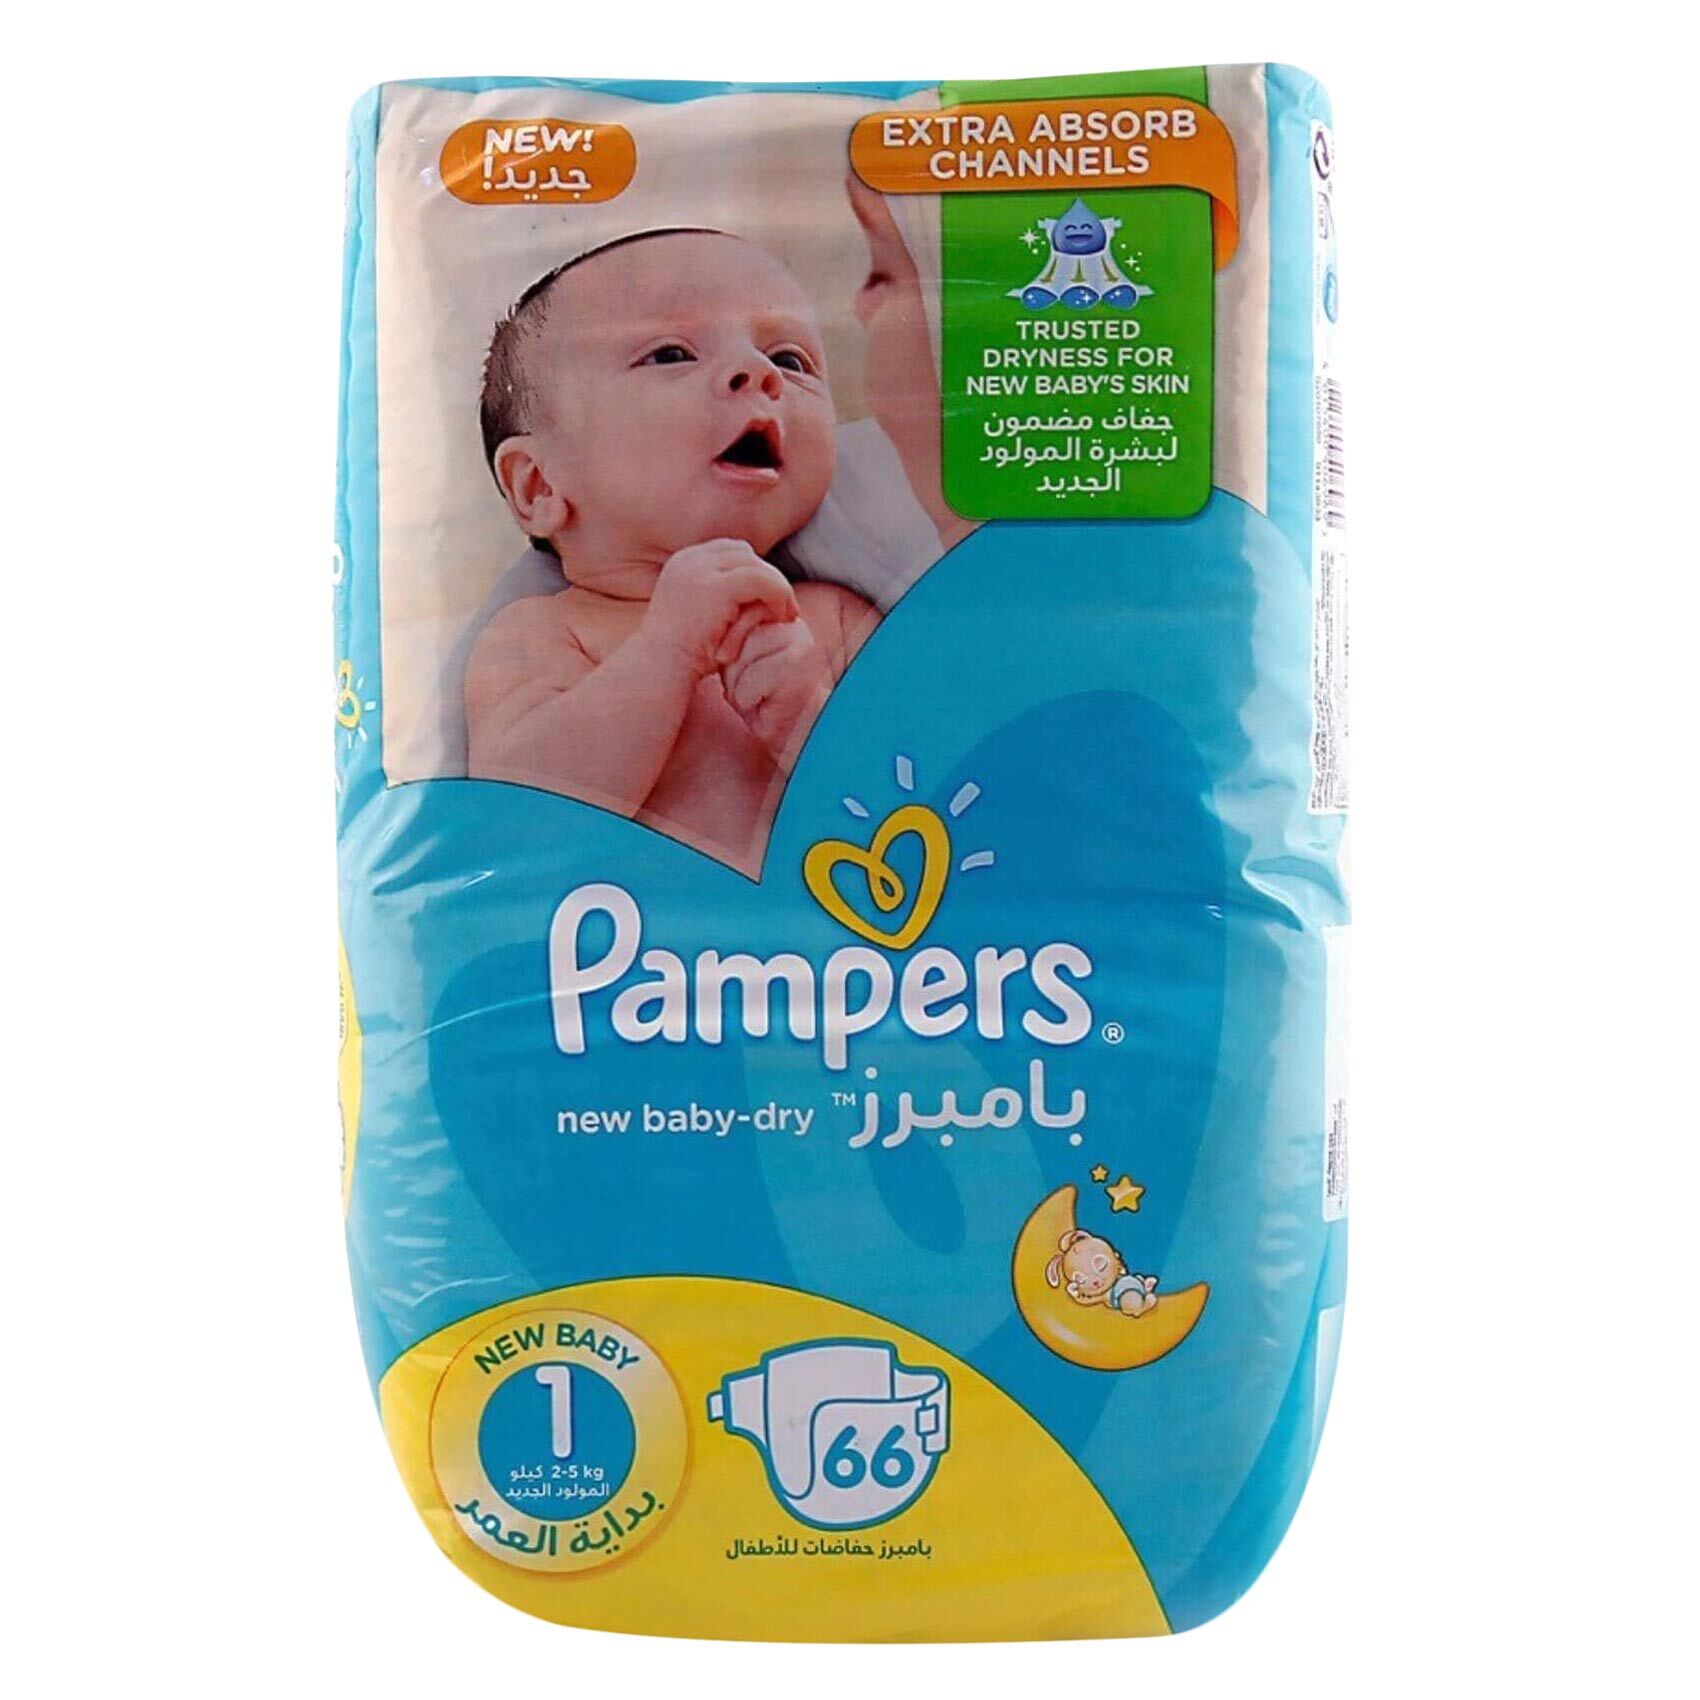 Buy Pampers Newborn Diaper Jumbo Size 1 66 Count 2-5 Kg Online - Carrefour  Kenya